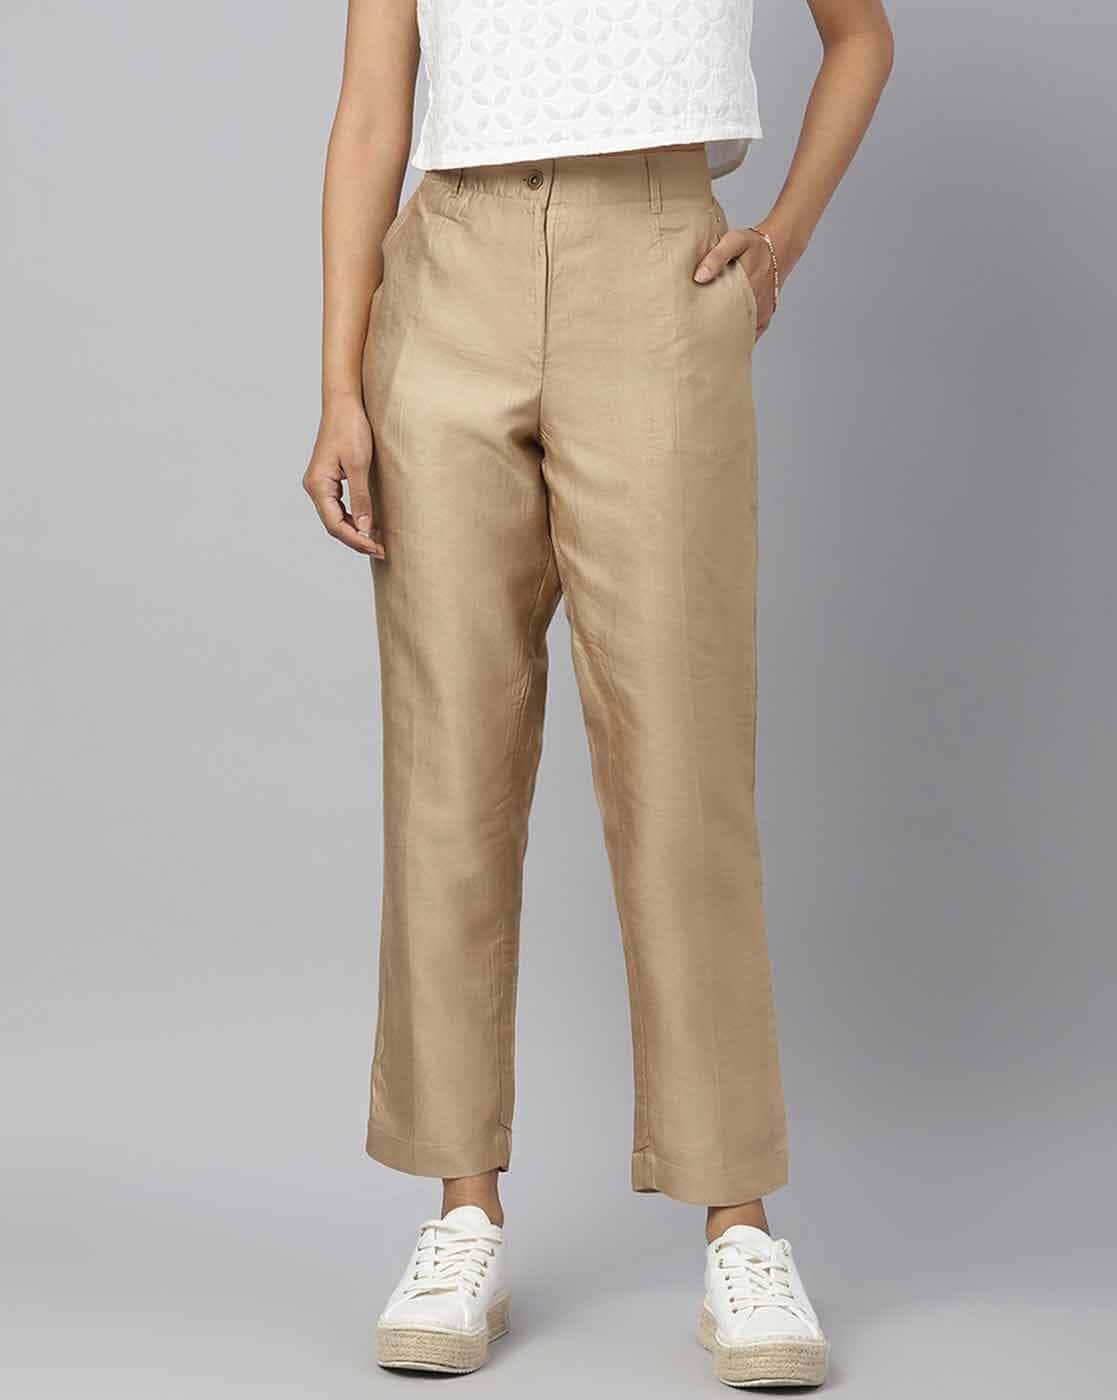 Buy Beige Cotton Slim Fit Regular Pants for Men Online at Fabindia   20047127